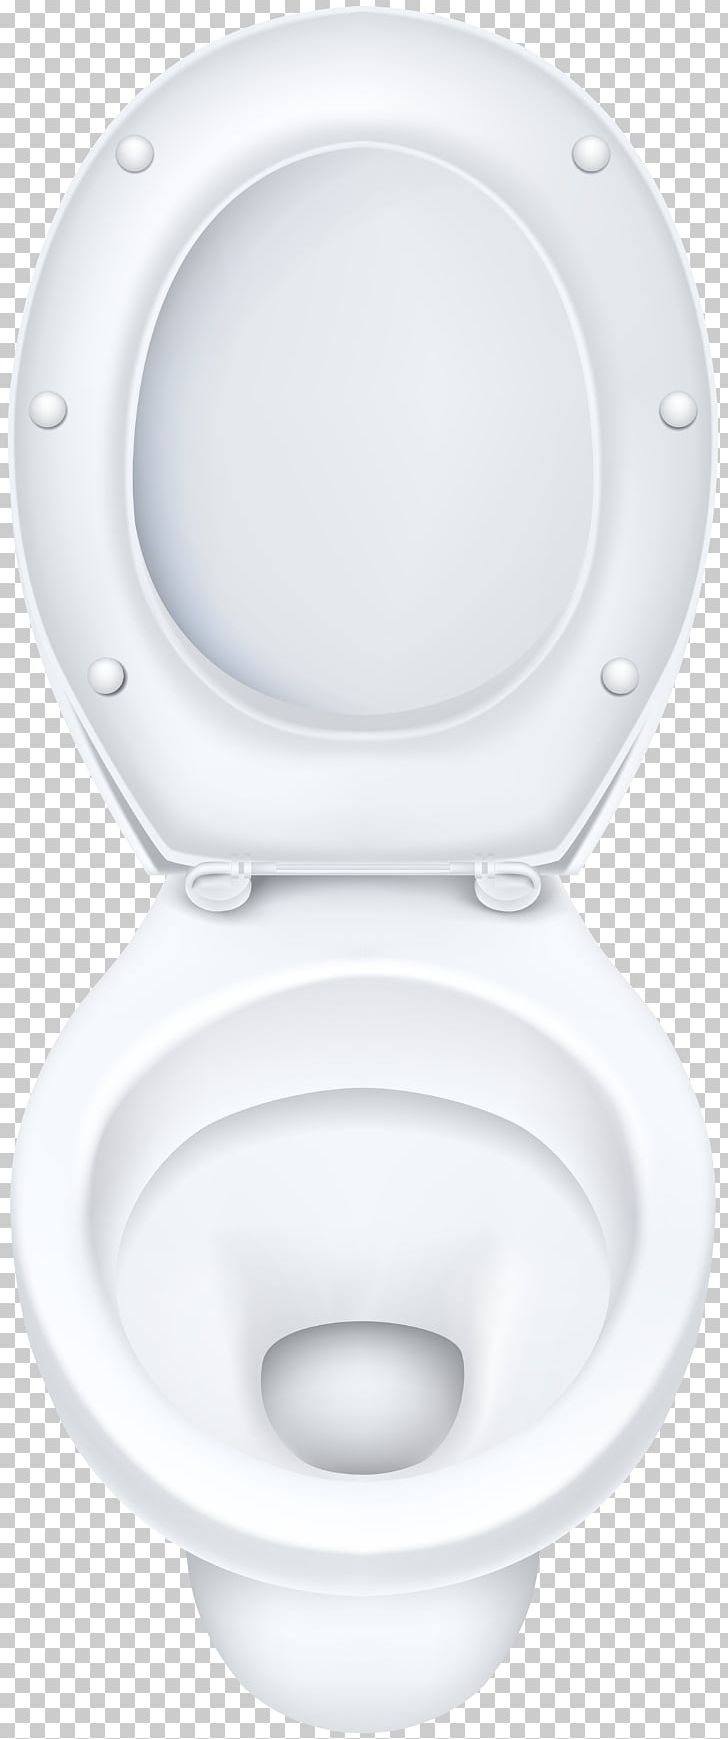 Toilet & Bidet Seats Tap Bathroom Sink PNG, Clipart, Angle, Bathroom, Bathroom Sink, Bowl, Clip Free PNG Download